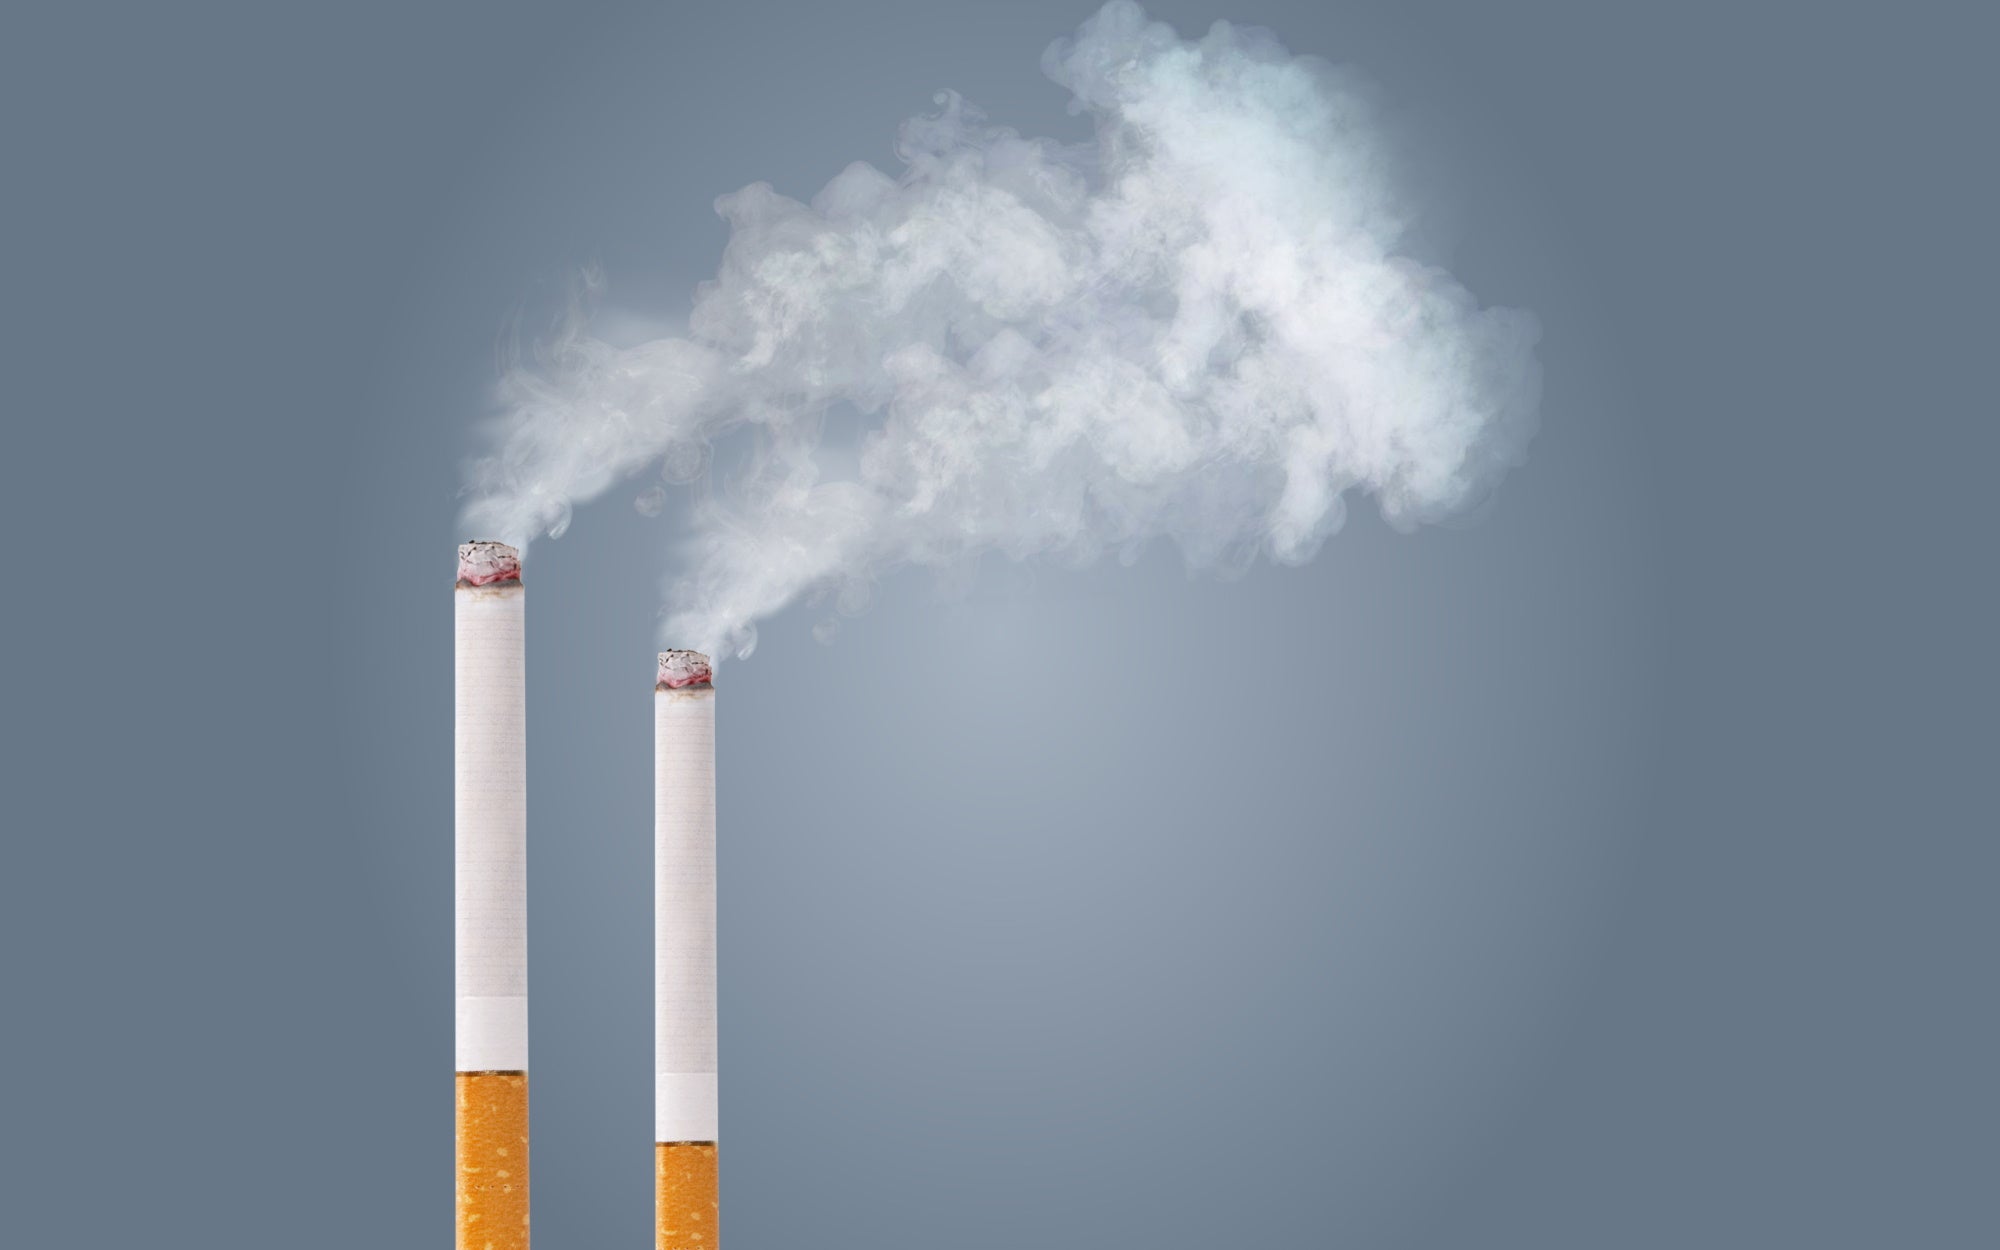 Two smoking cigarettes that look like factory smoke stacks